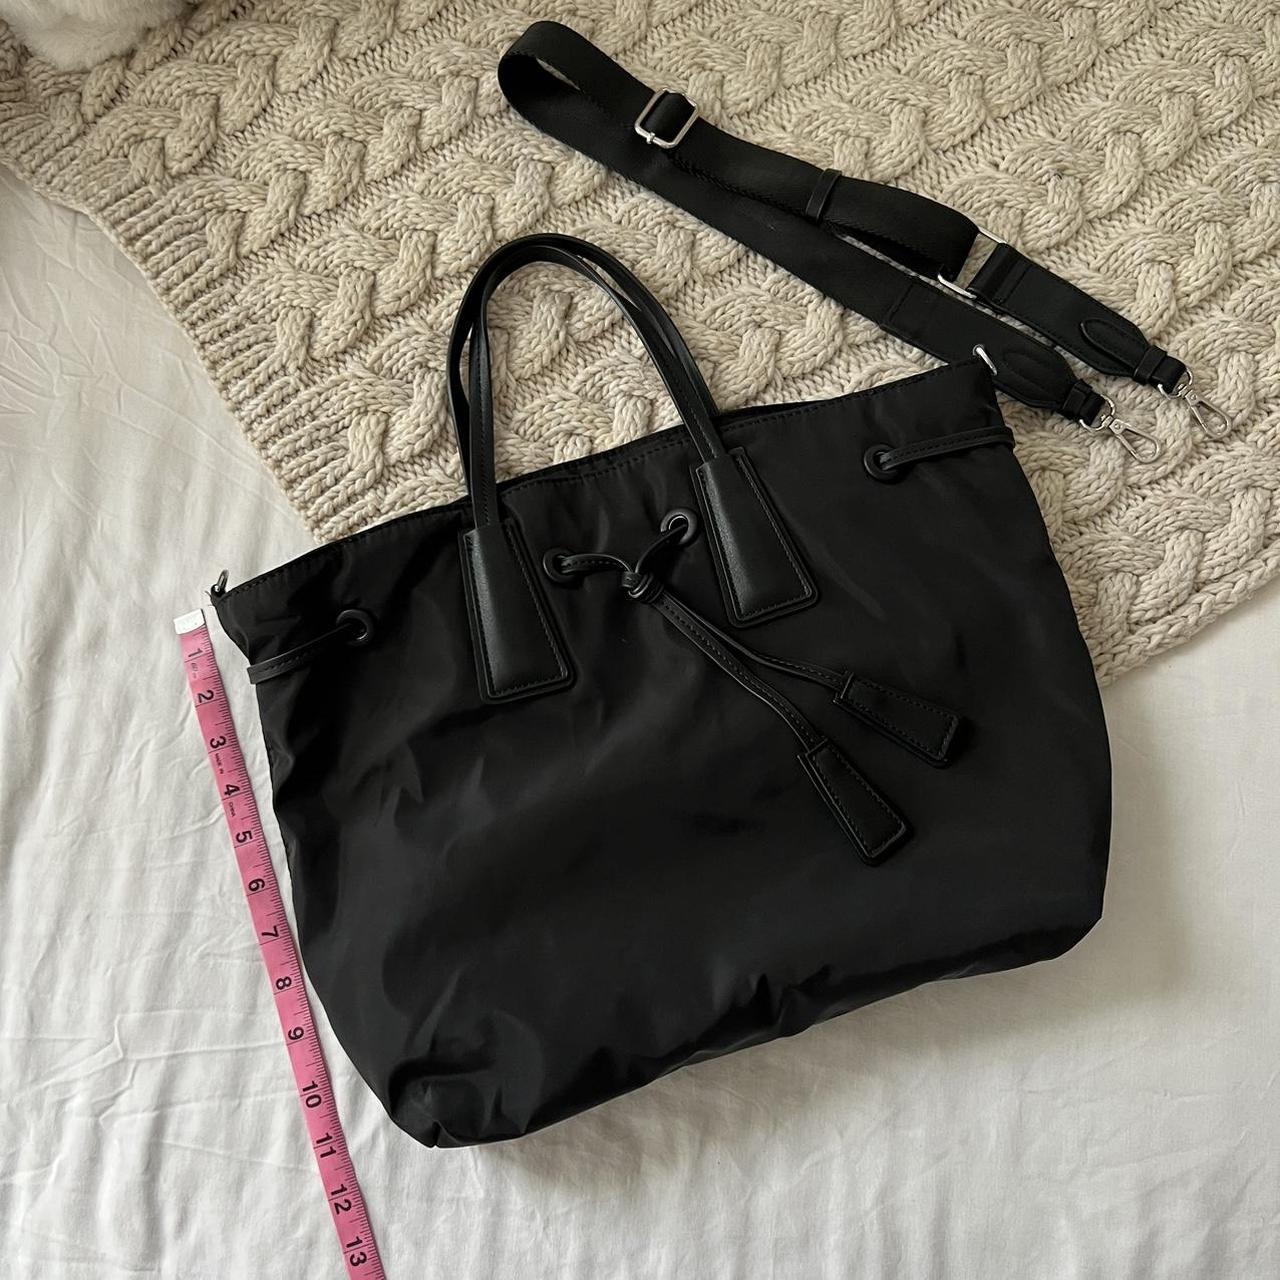 Zara purse brand new, comes with a crossbody strap - Depop